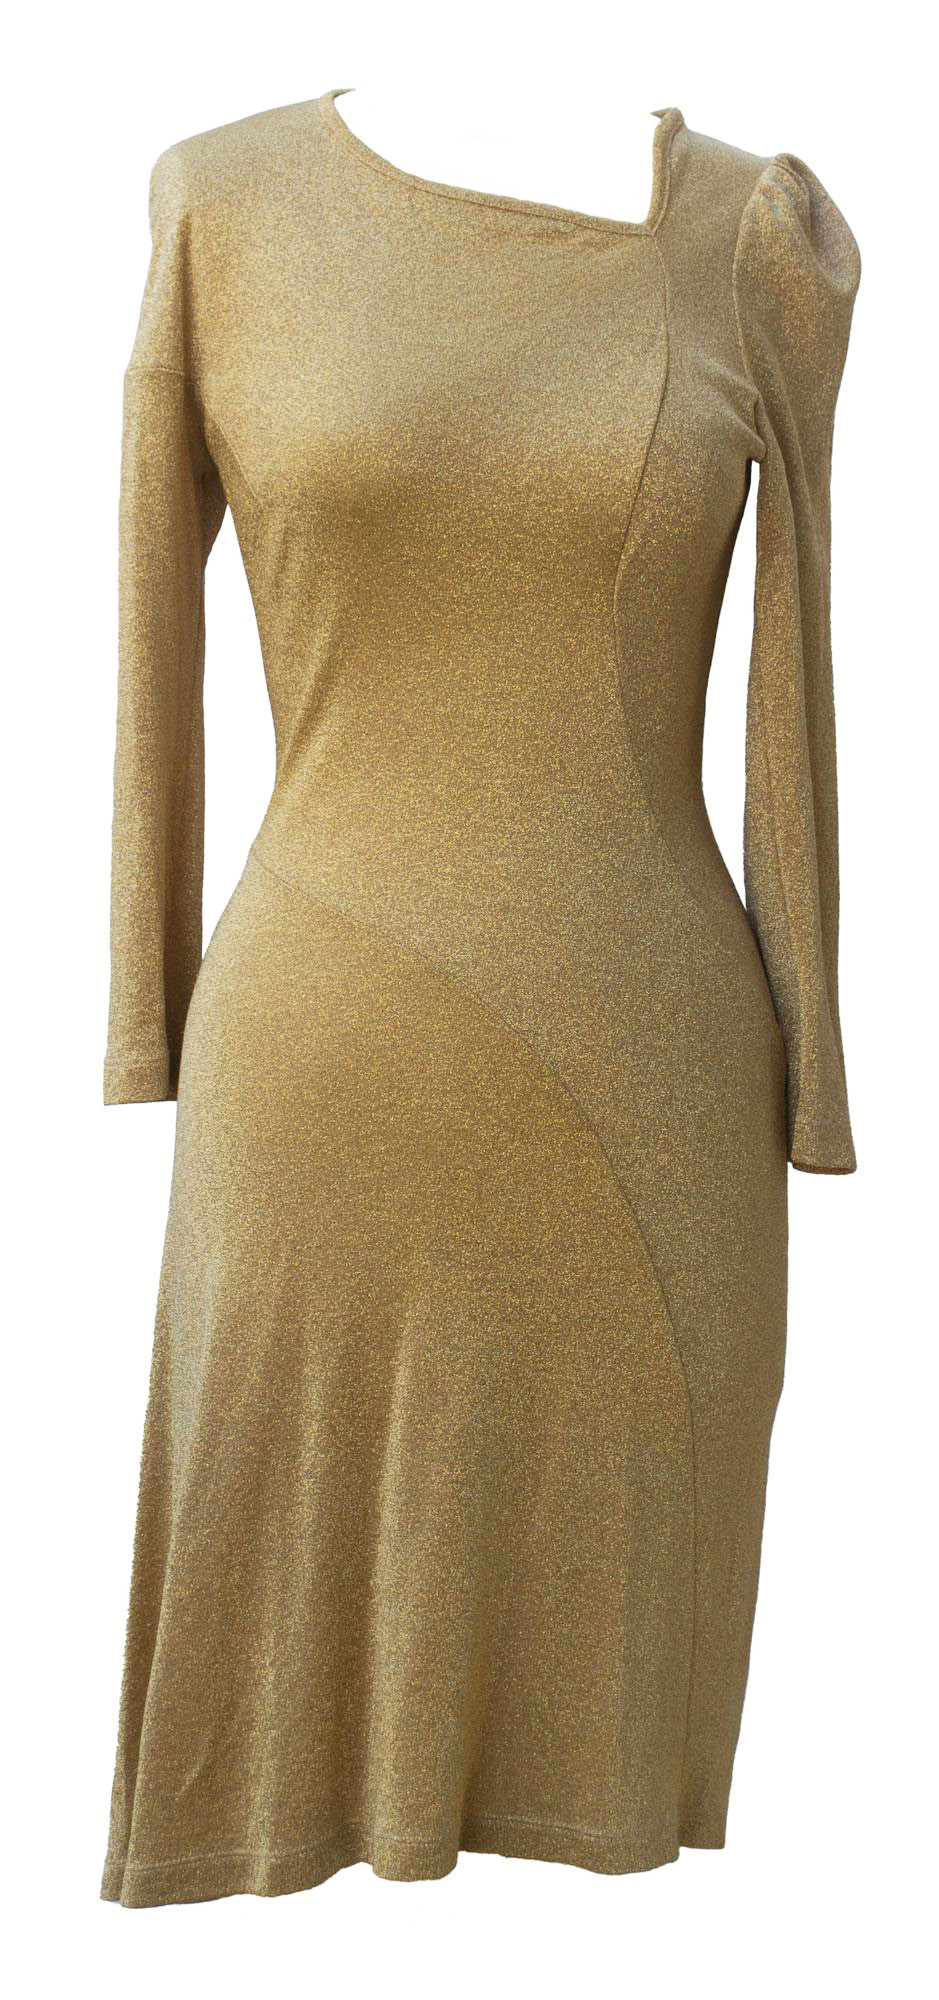 Vivienne Westwood RED LABEL LUREX DRESS Description: Asymmetrical dress in...